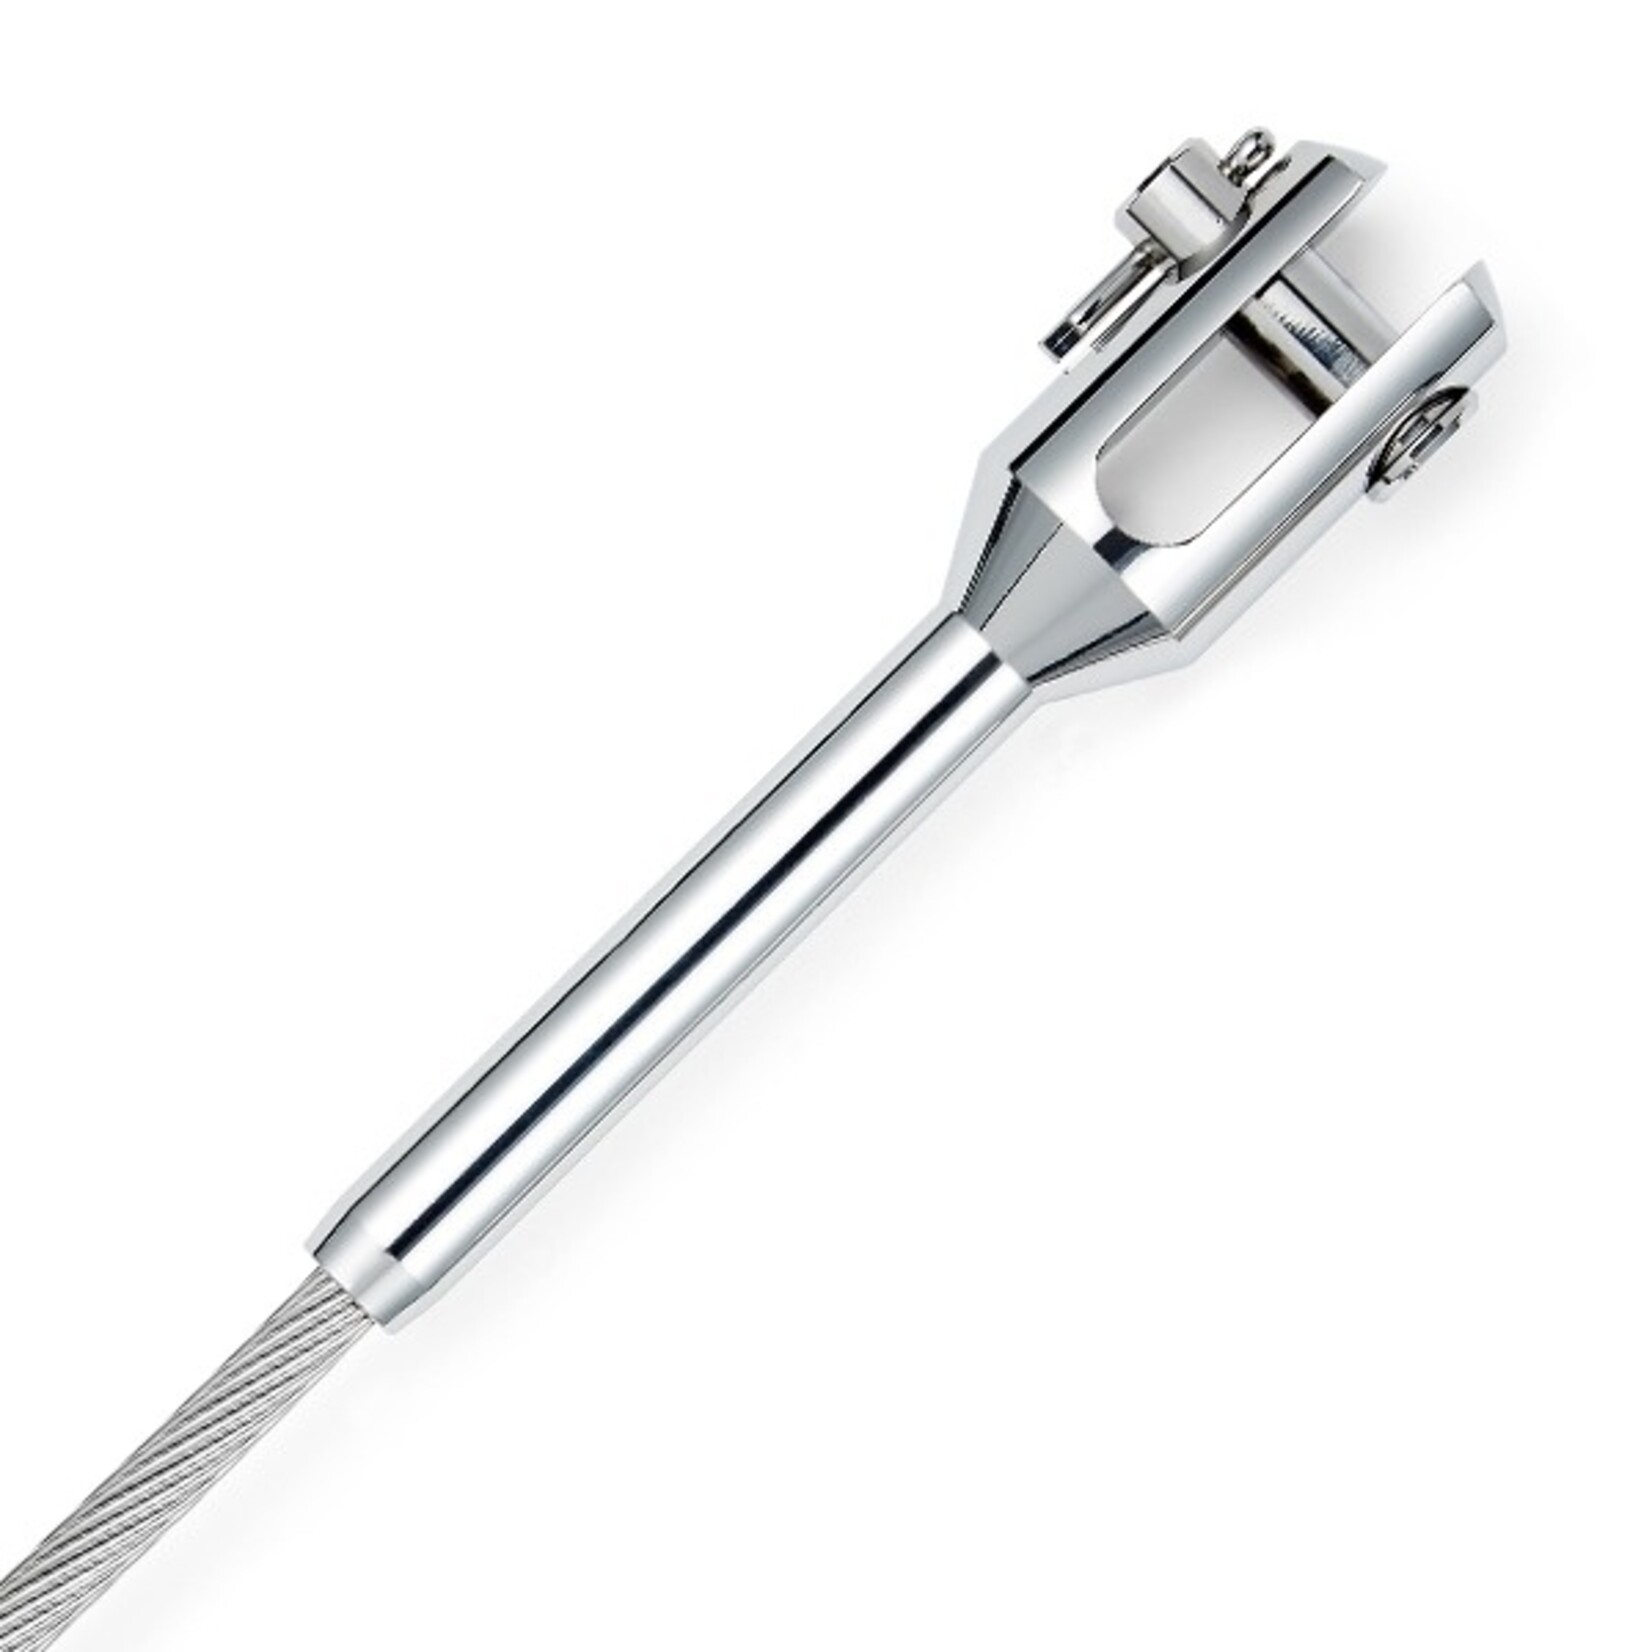 STA-LOK Swage fork  5mm. machined